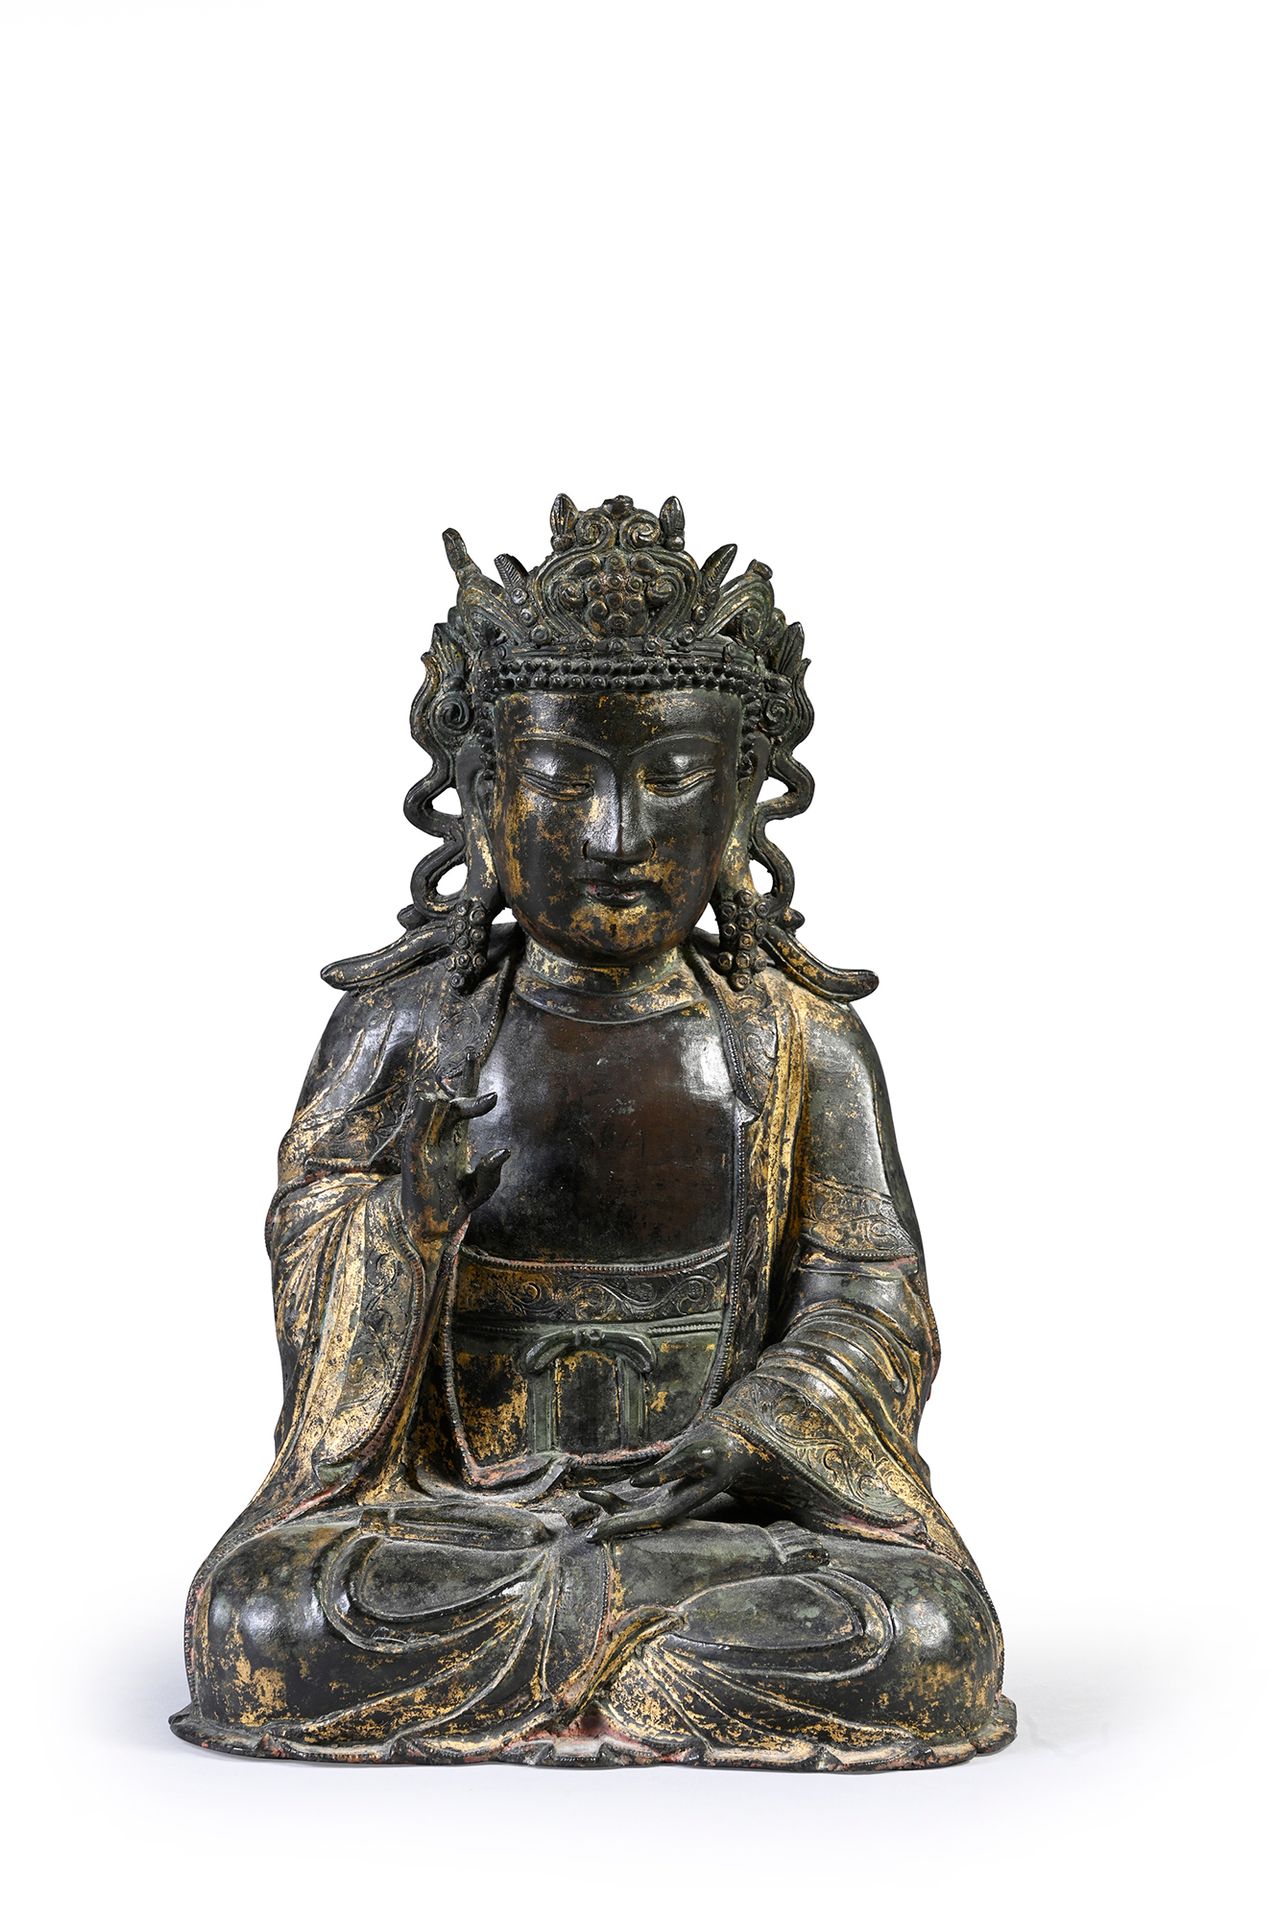 CHINE, XVIIe siècle 罕见的青铜雕像，以前是鎏金漆，展示了一个坐着的观音菩萨在禅定。
有旧漆的痕迹
高度：33厘米